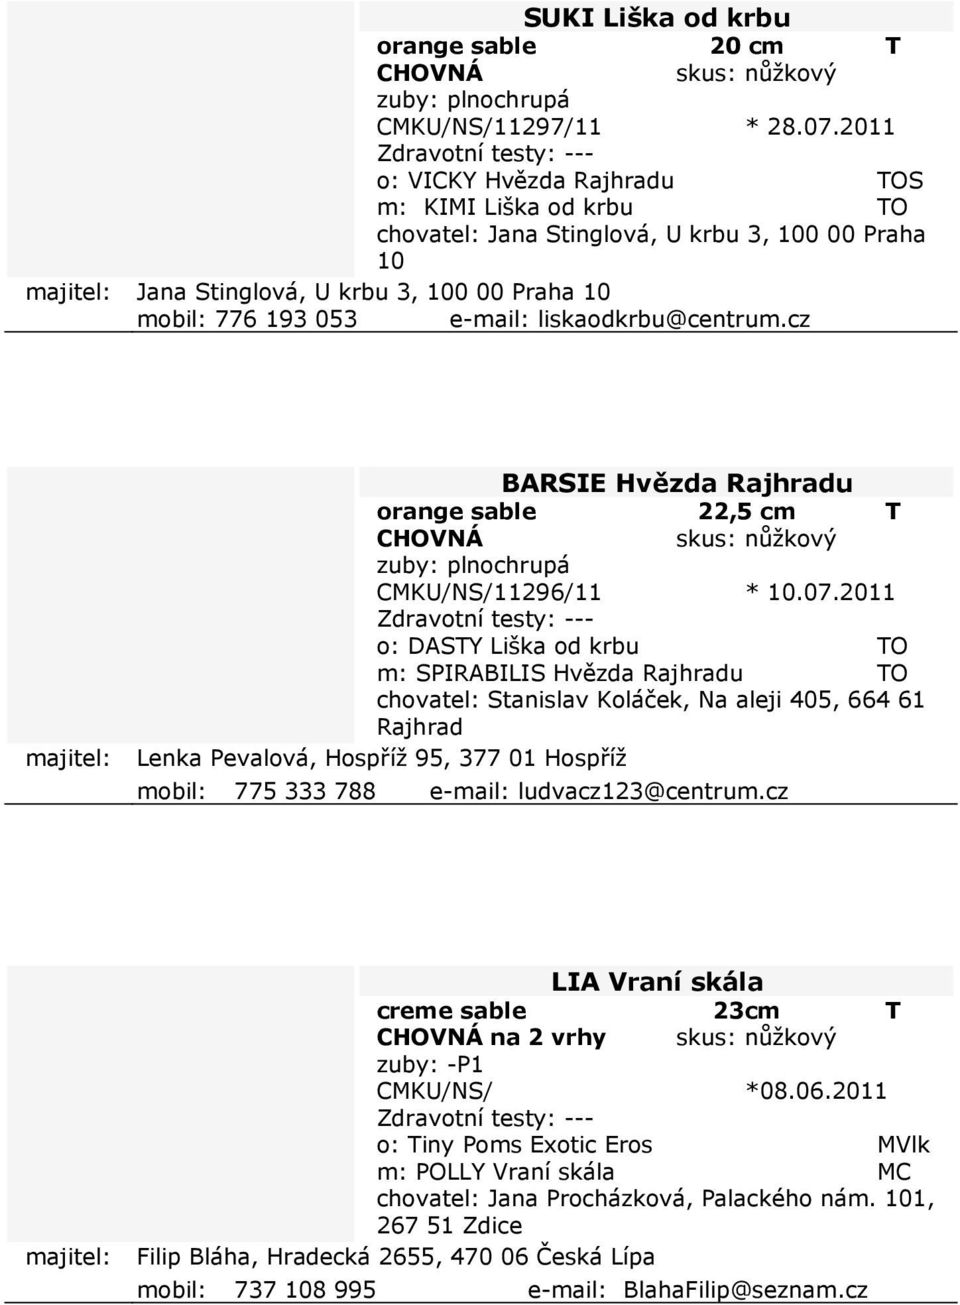 liskaodkrbu@centrum.cz BARSIE Hvězda Rajhradu orange sable 22,5 cm T zuby: plnochrupá CMKU/NS/11296/11 * 10.07.